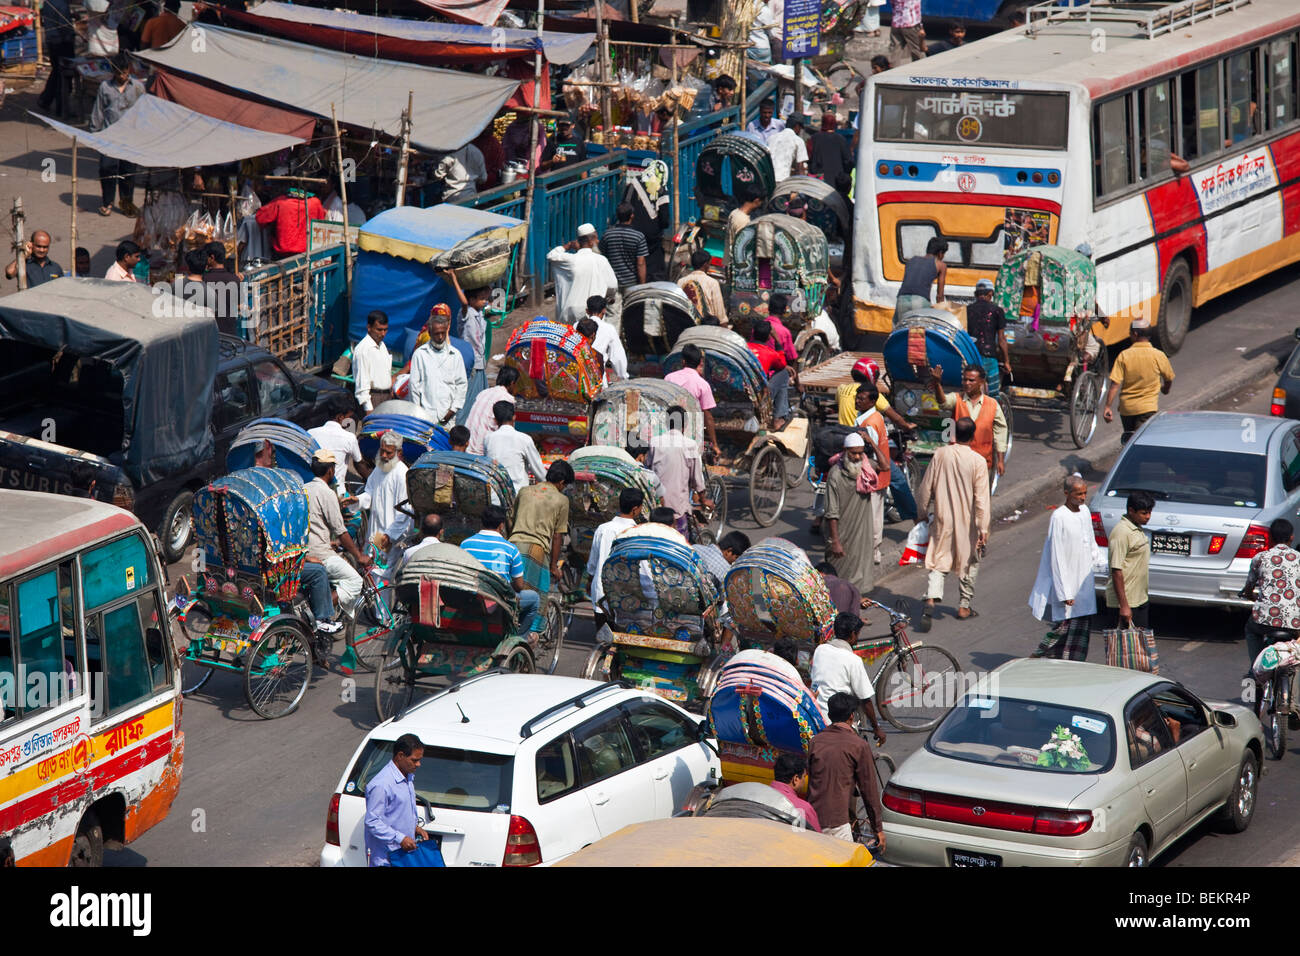 Busy street in Dhaka Bangladesh Stock Photo